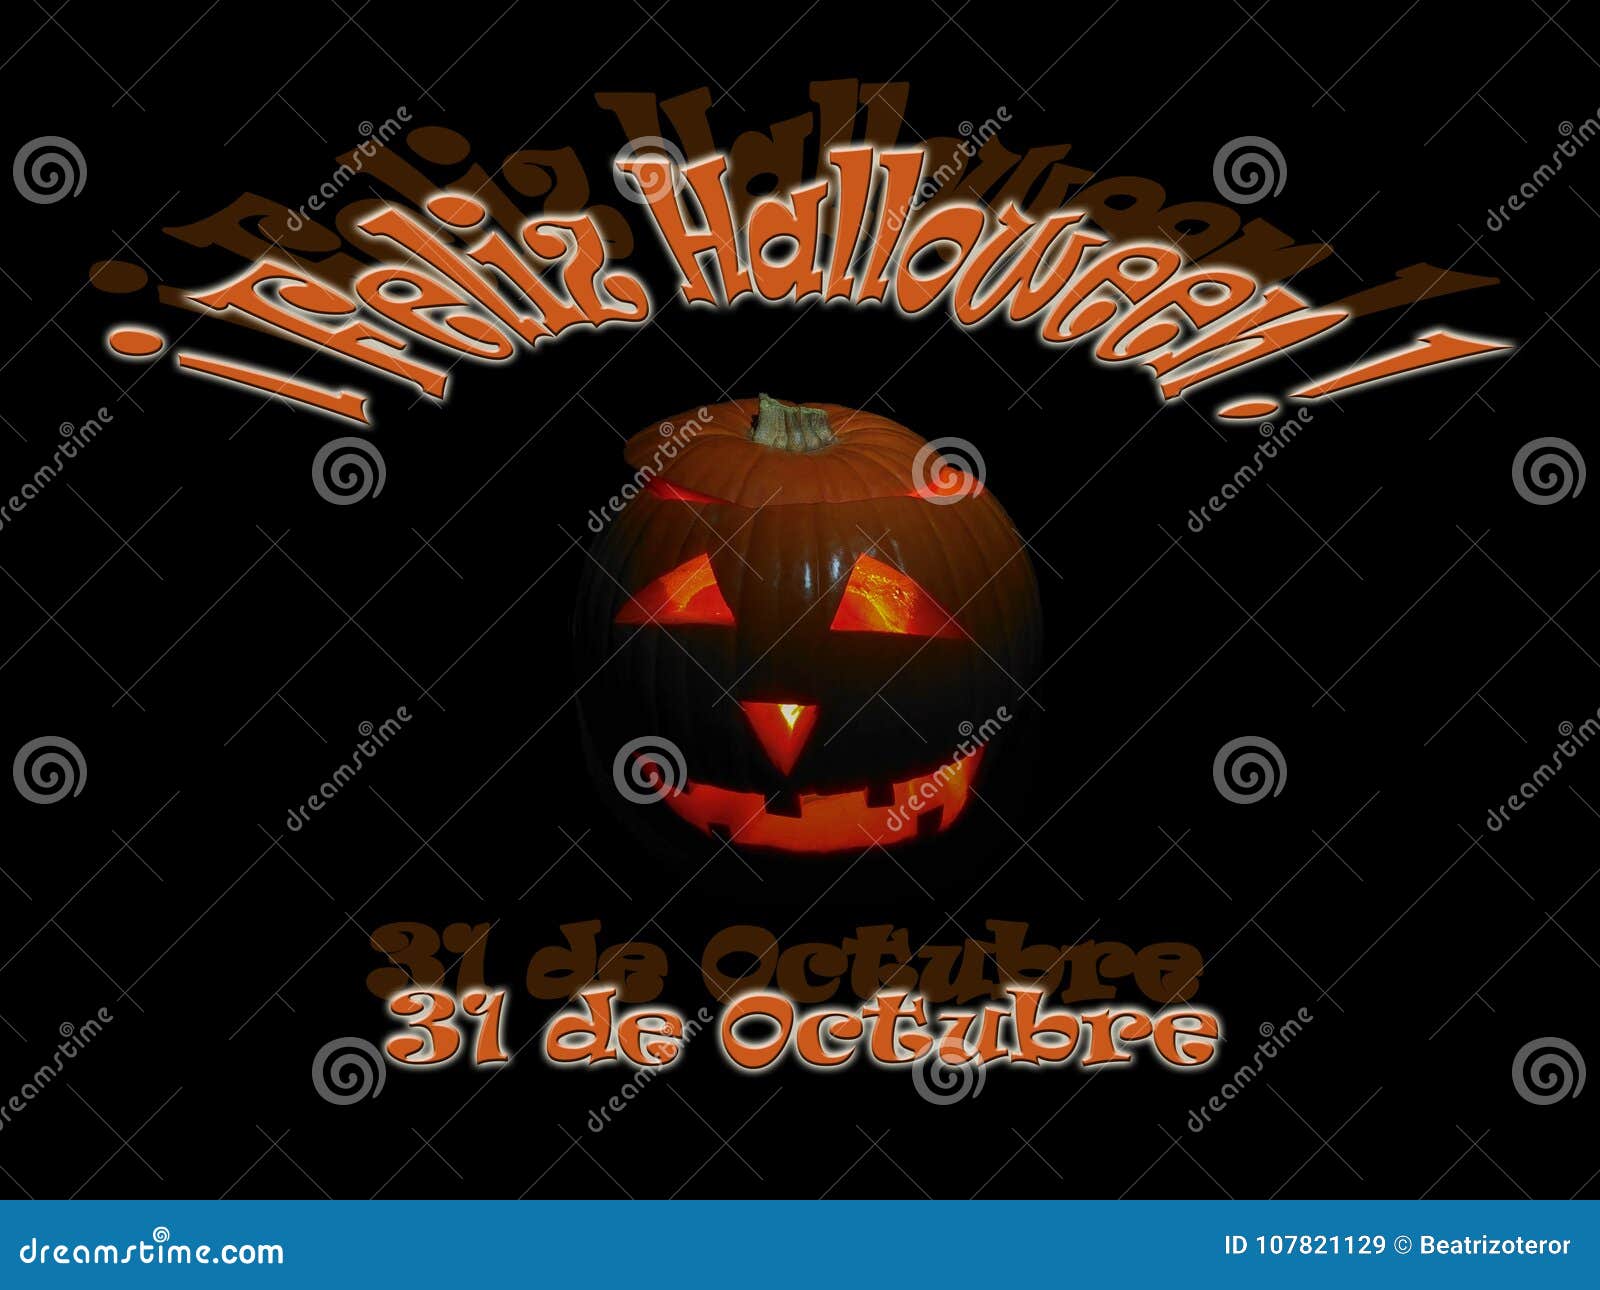 happy halloween poster with pumpkin, spanish